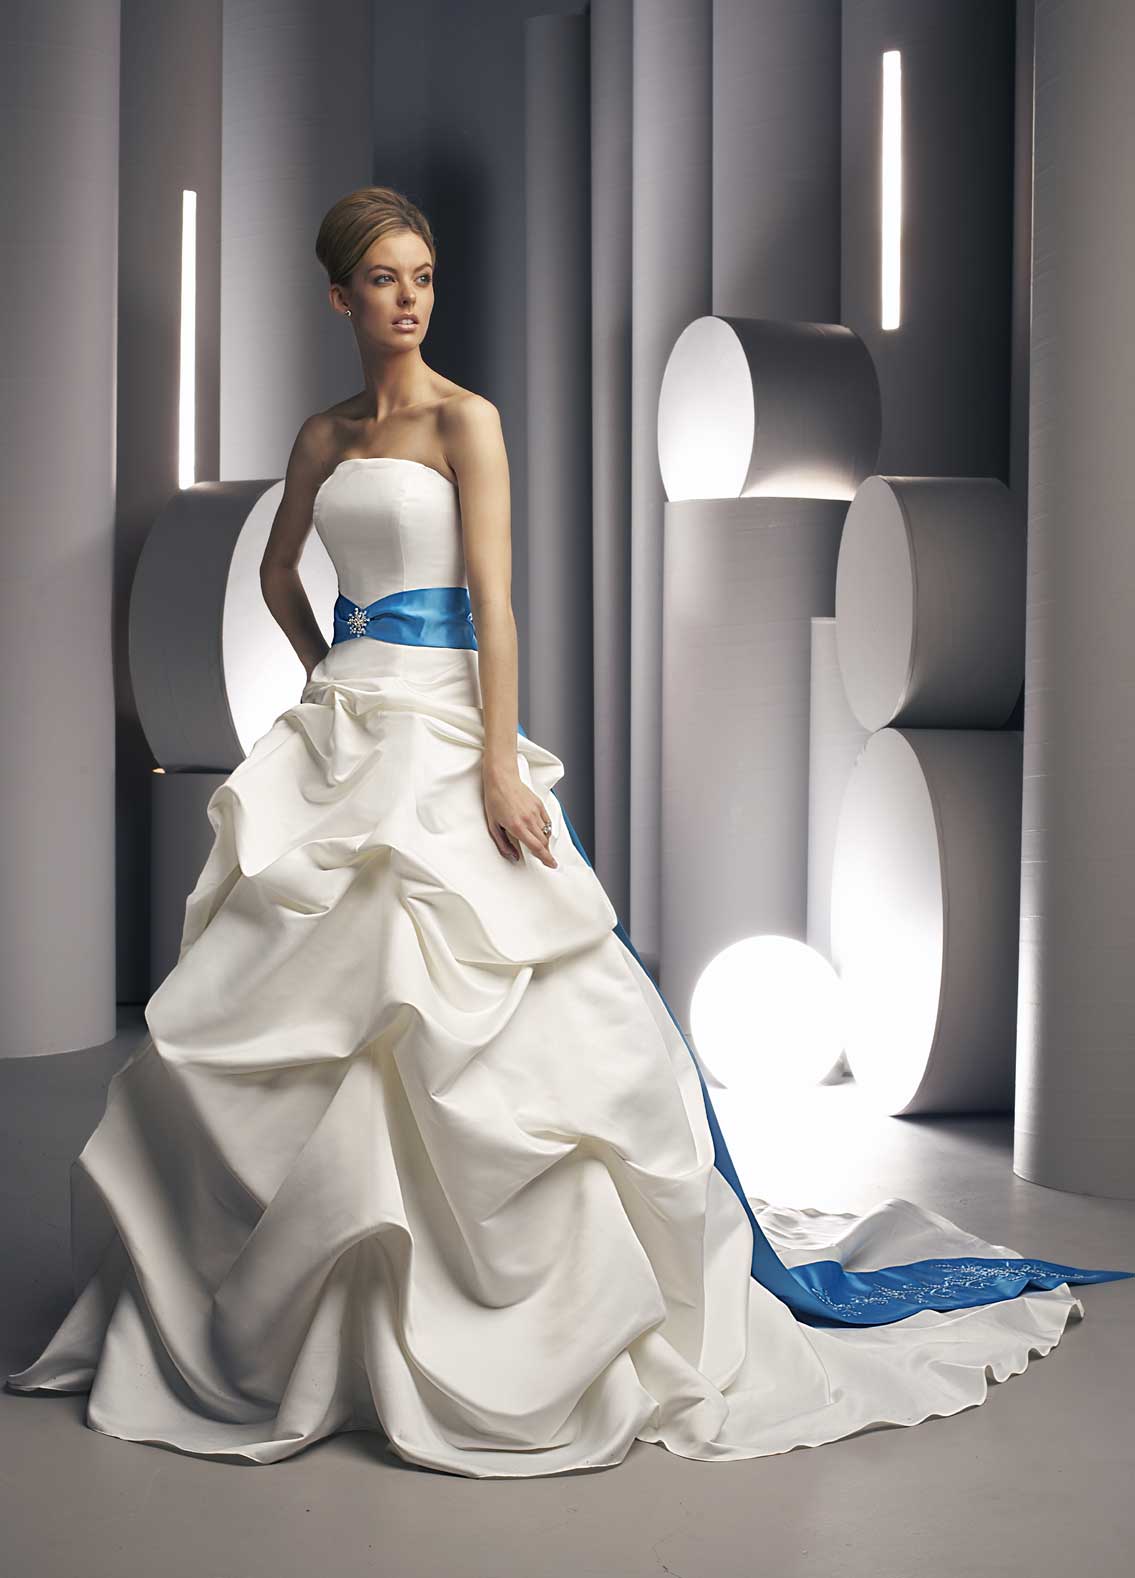 White Wedding Gown with blue sash